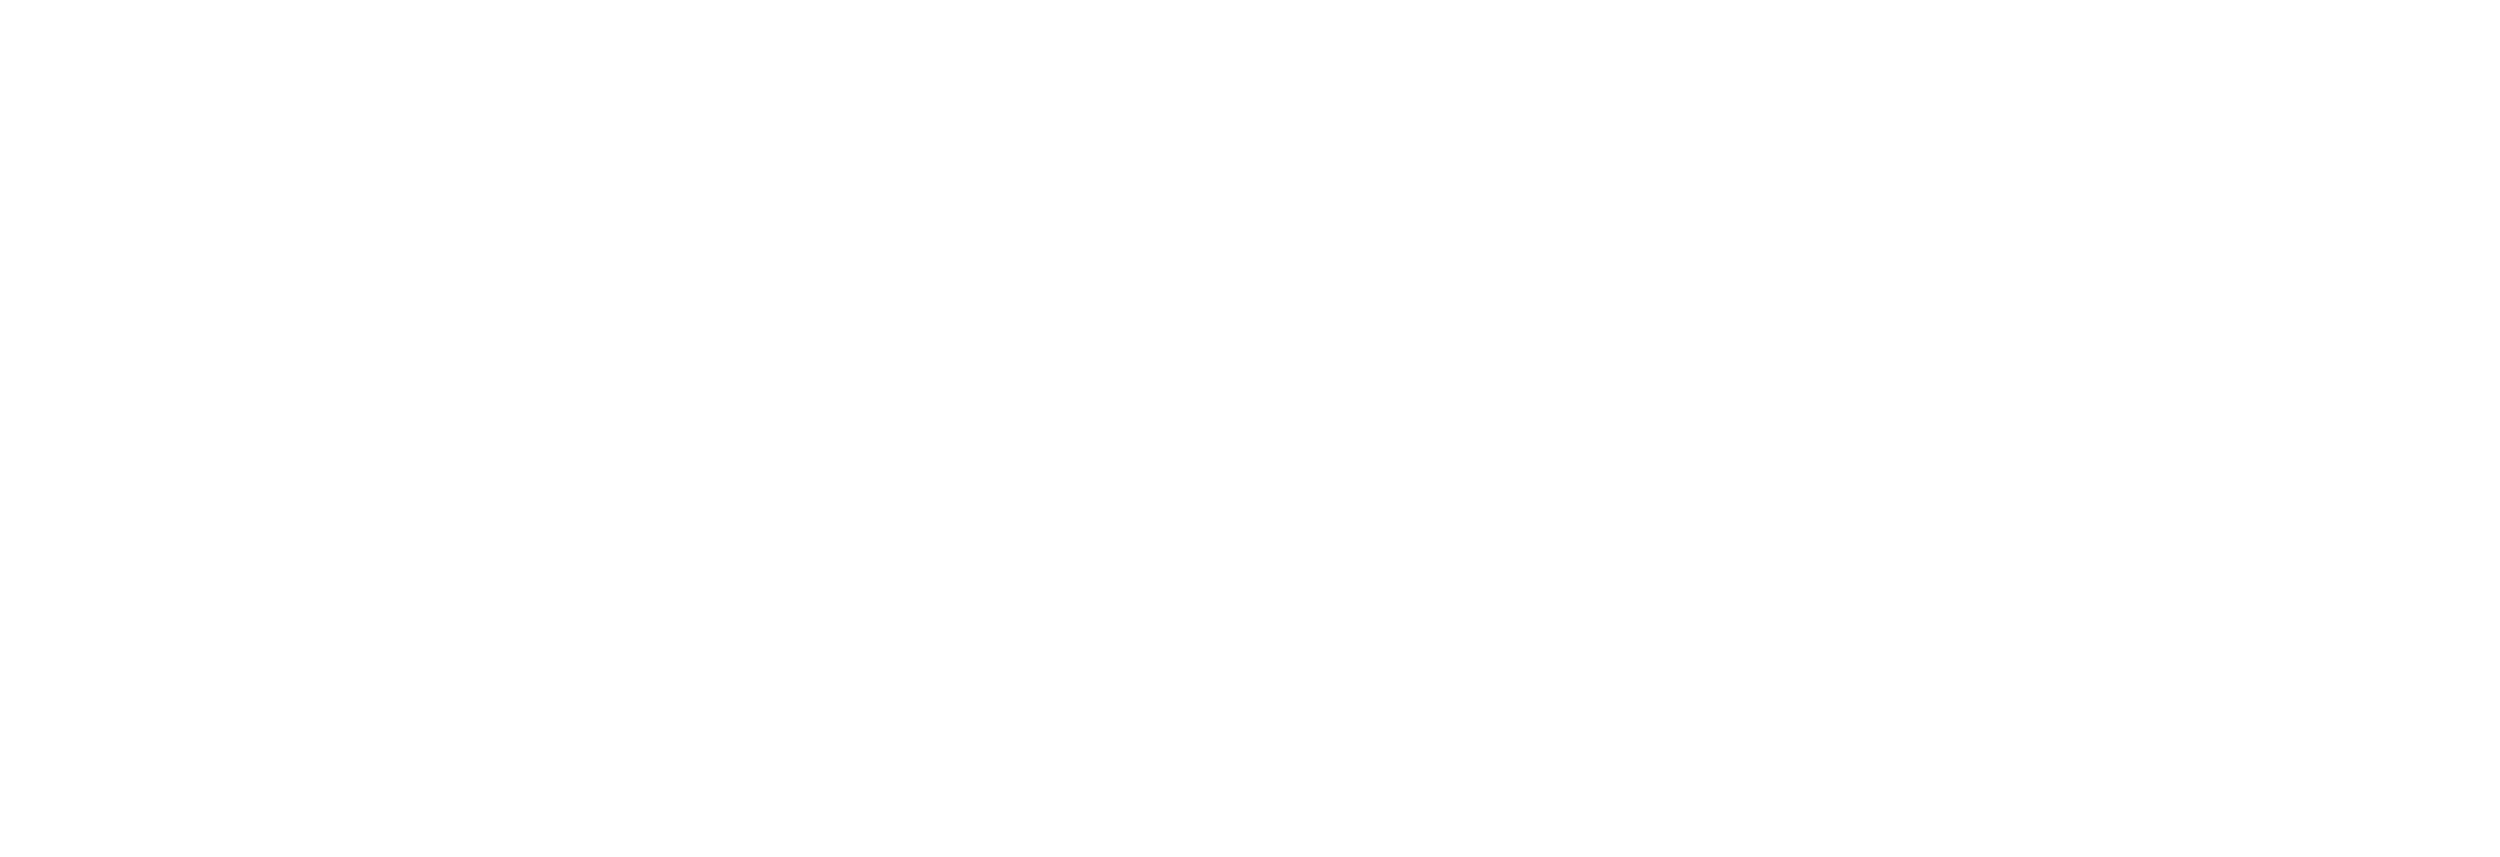 Camilo Bee Lab